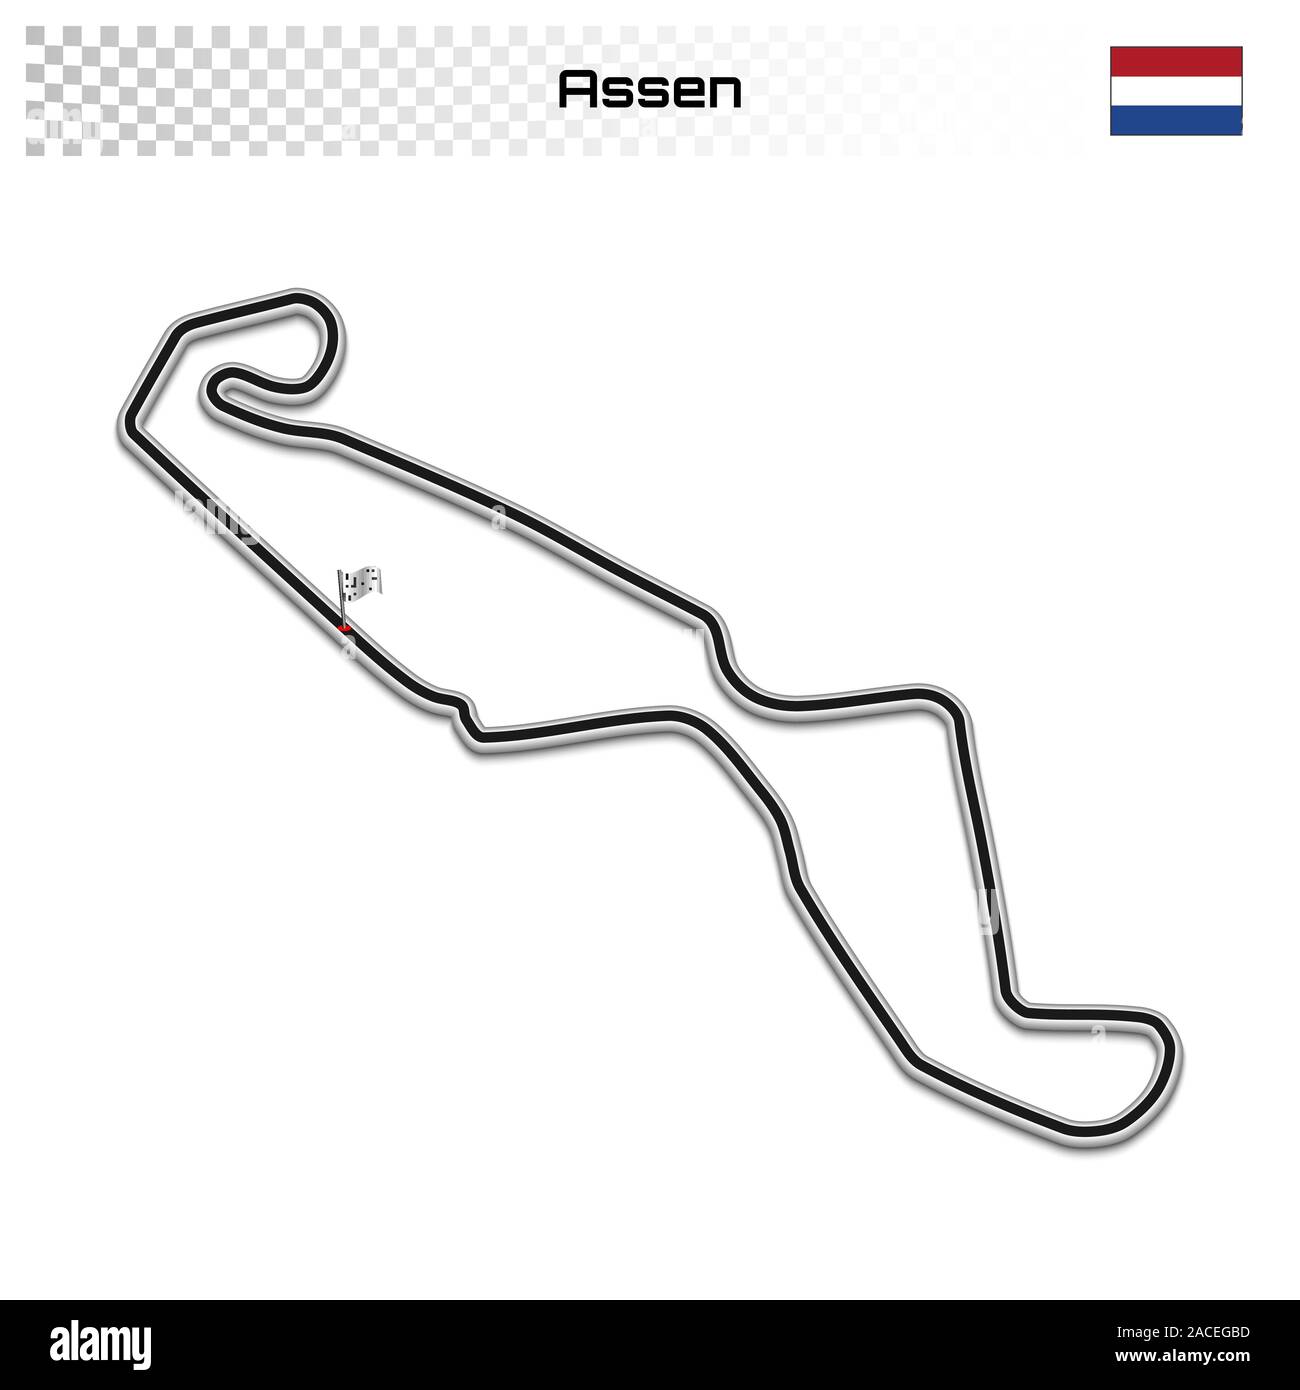 Assen circuit for motorsport and autosport. Dutch grand prix race track. Stock Vector